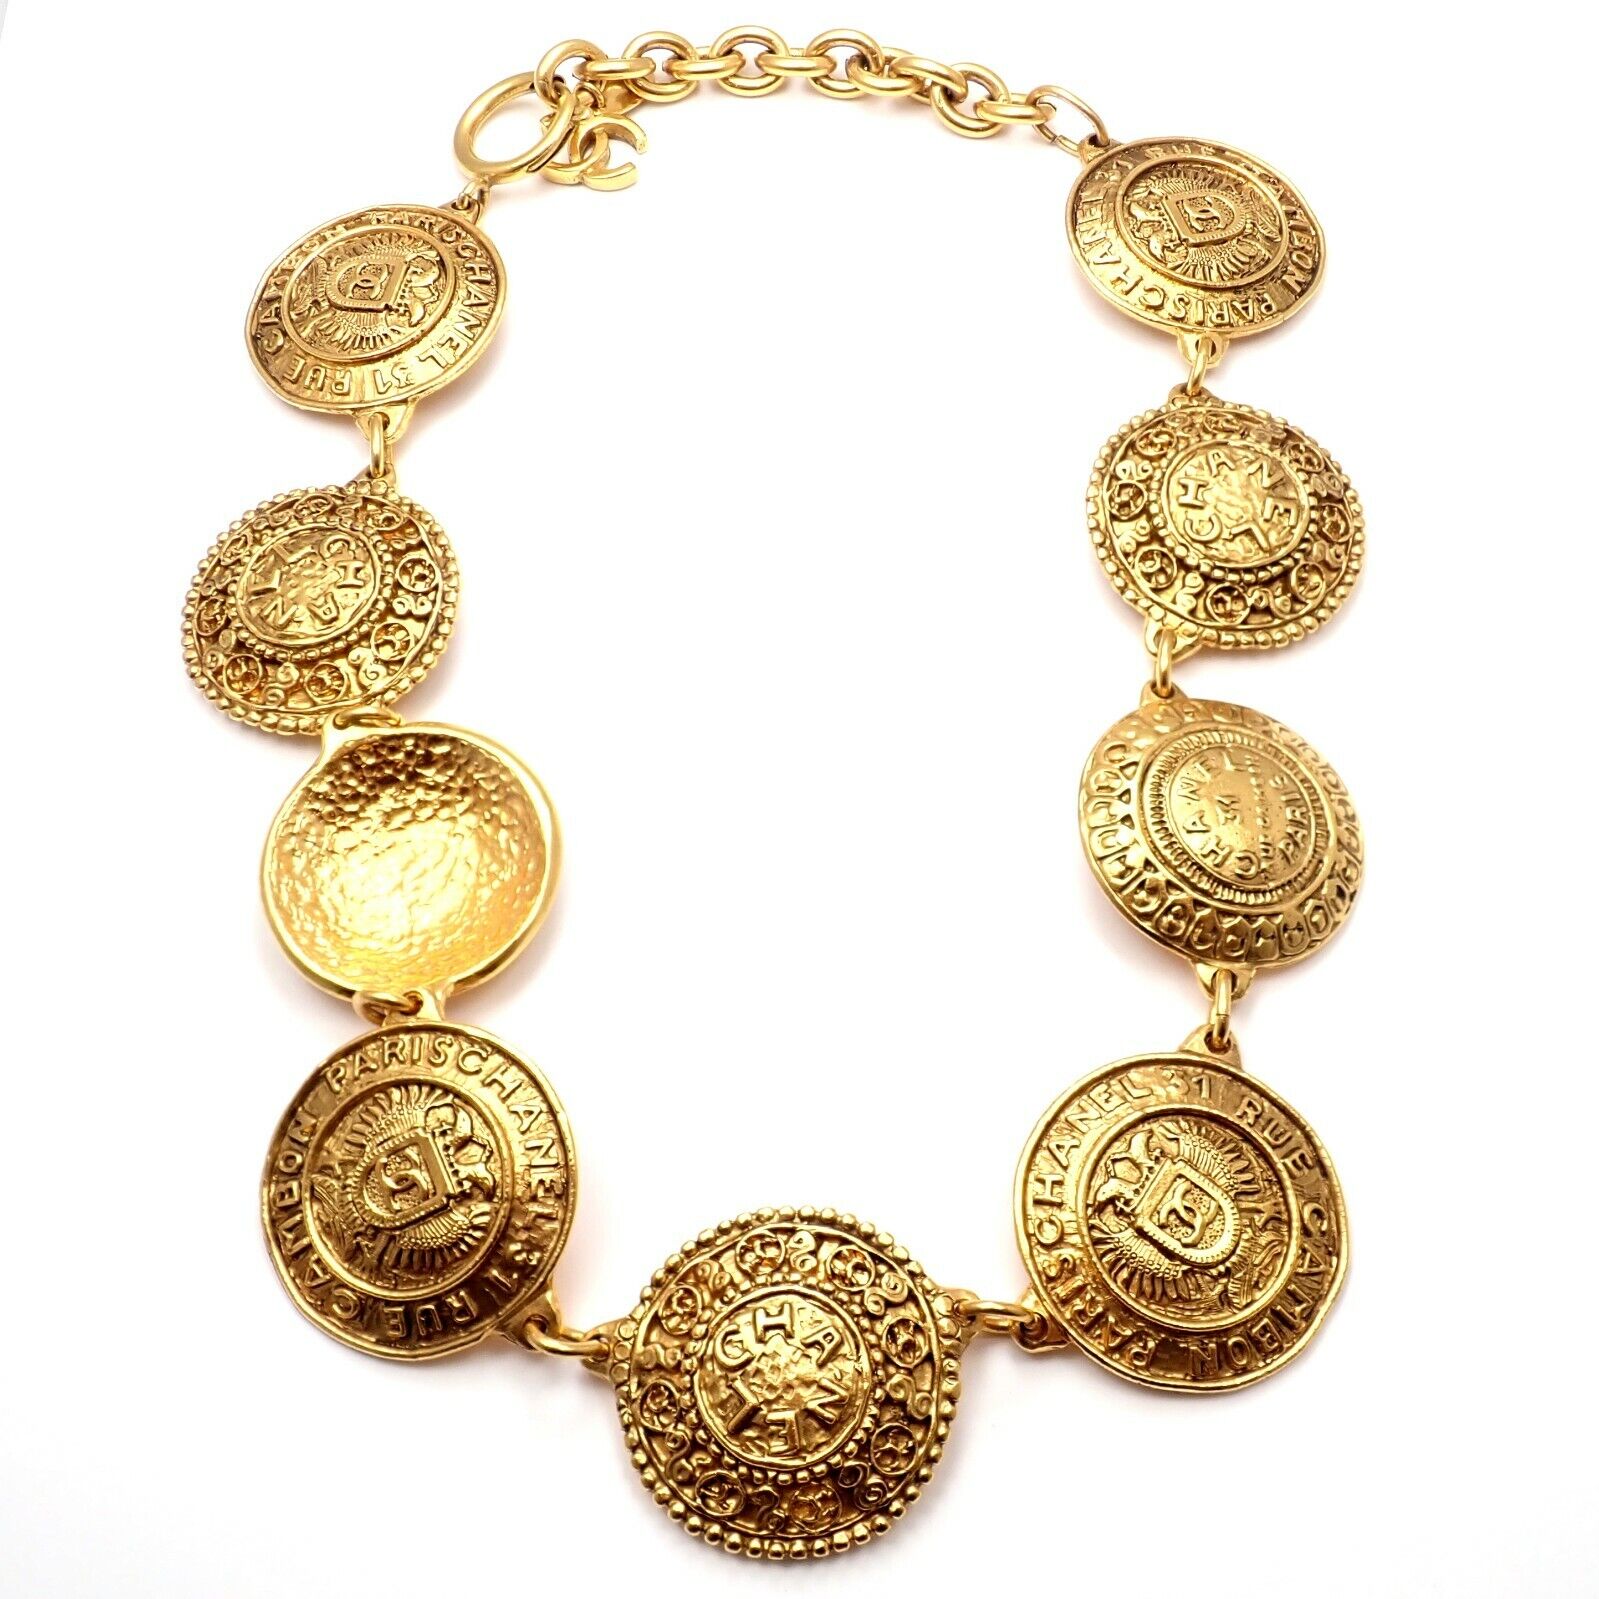 vintage authentic chanel necklace